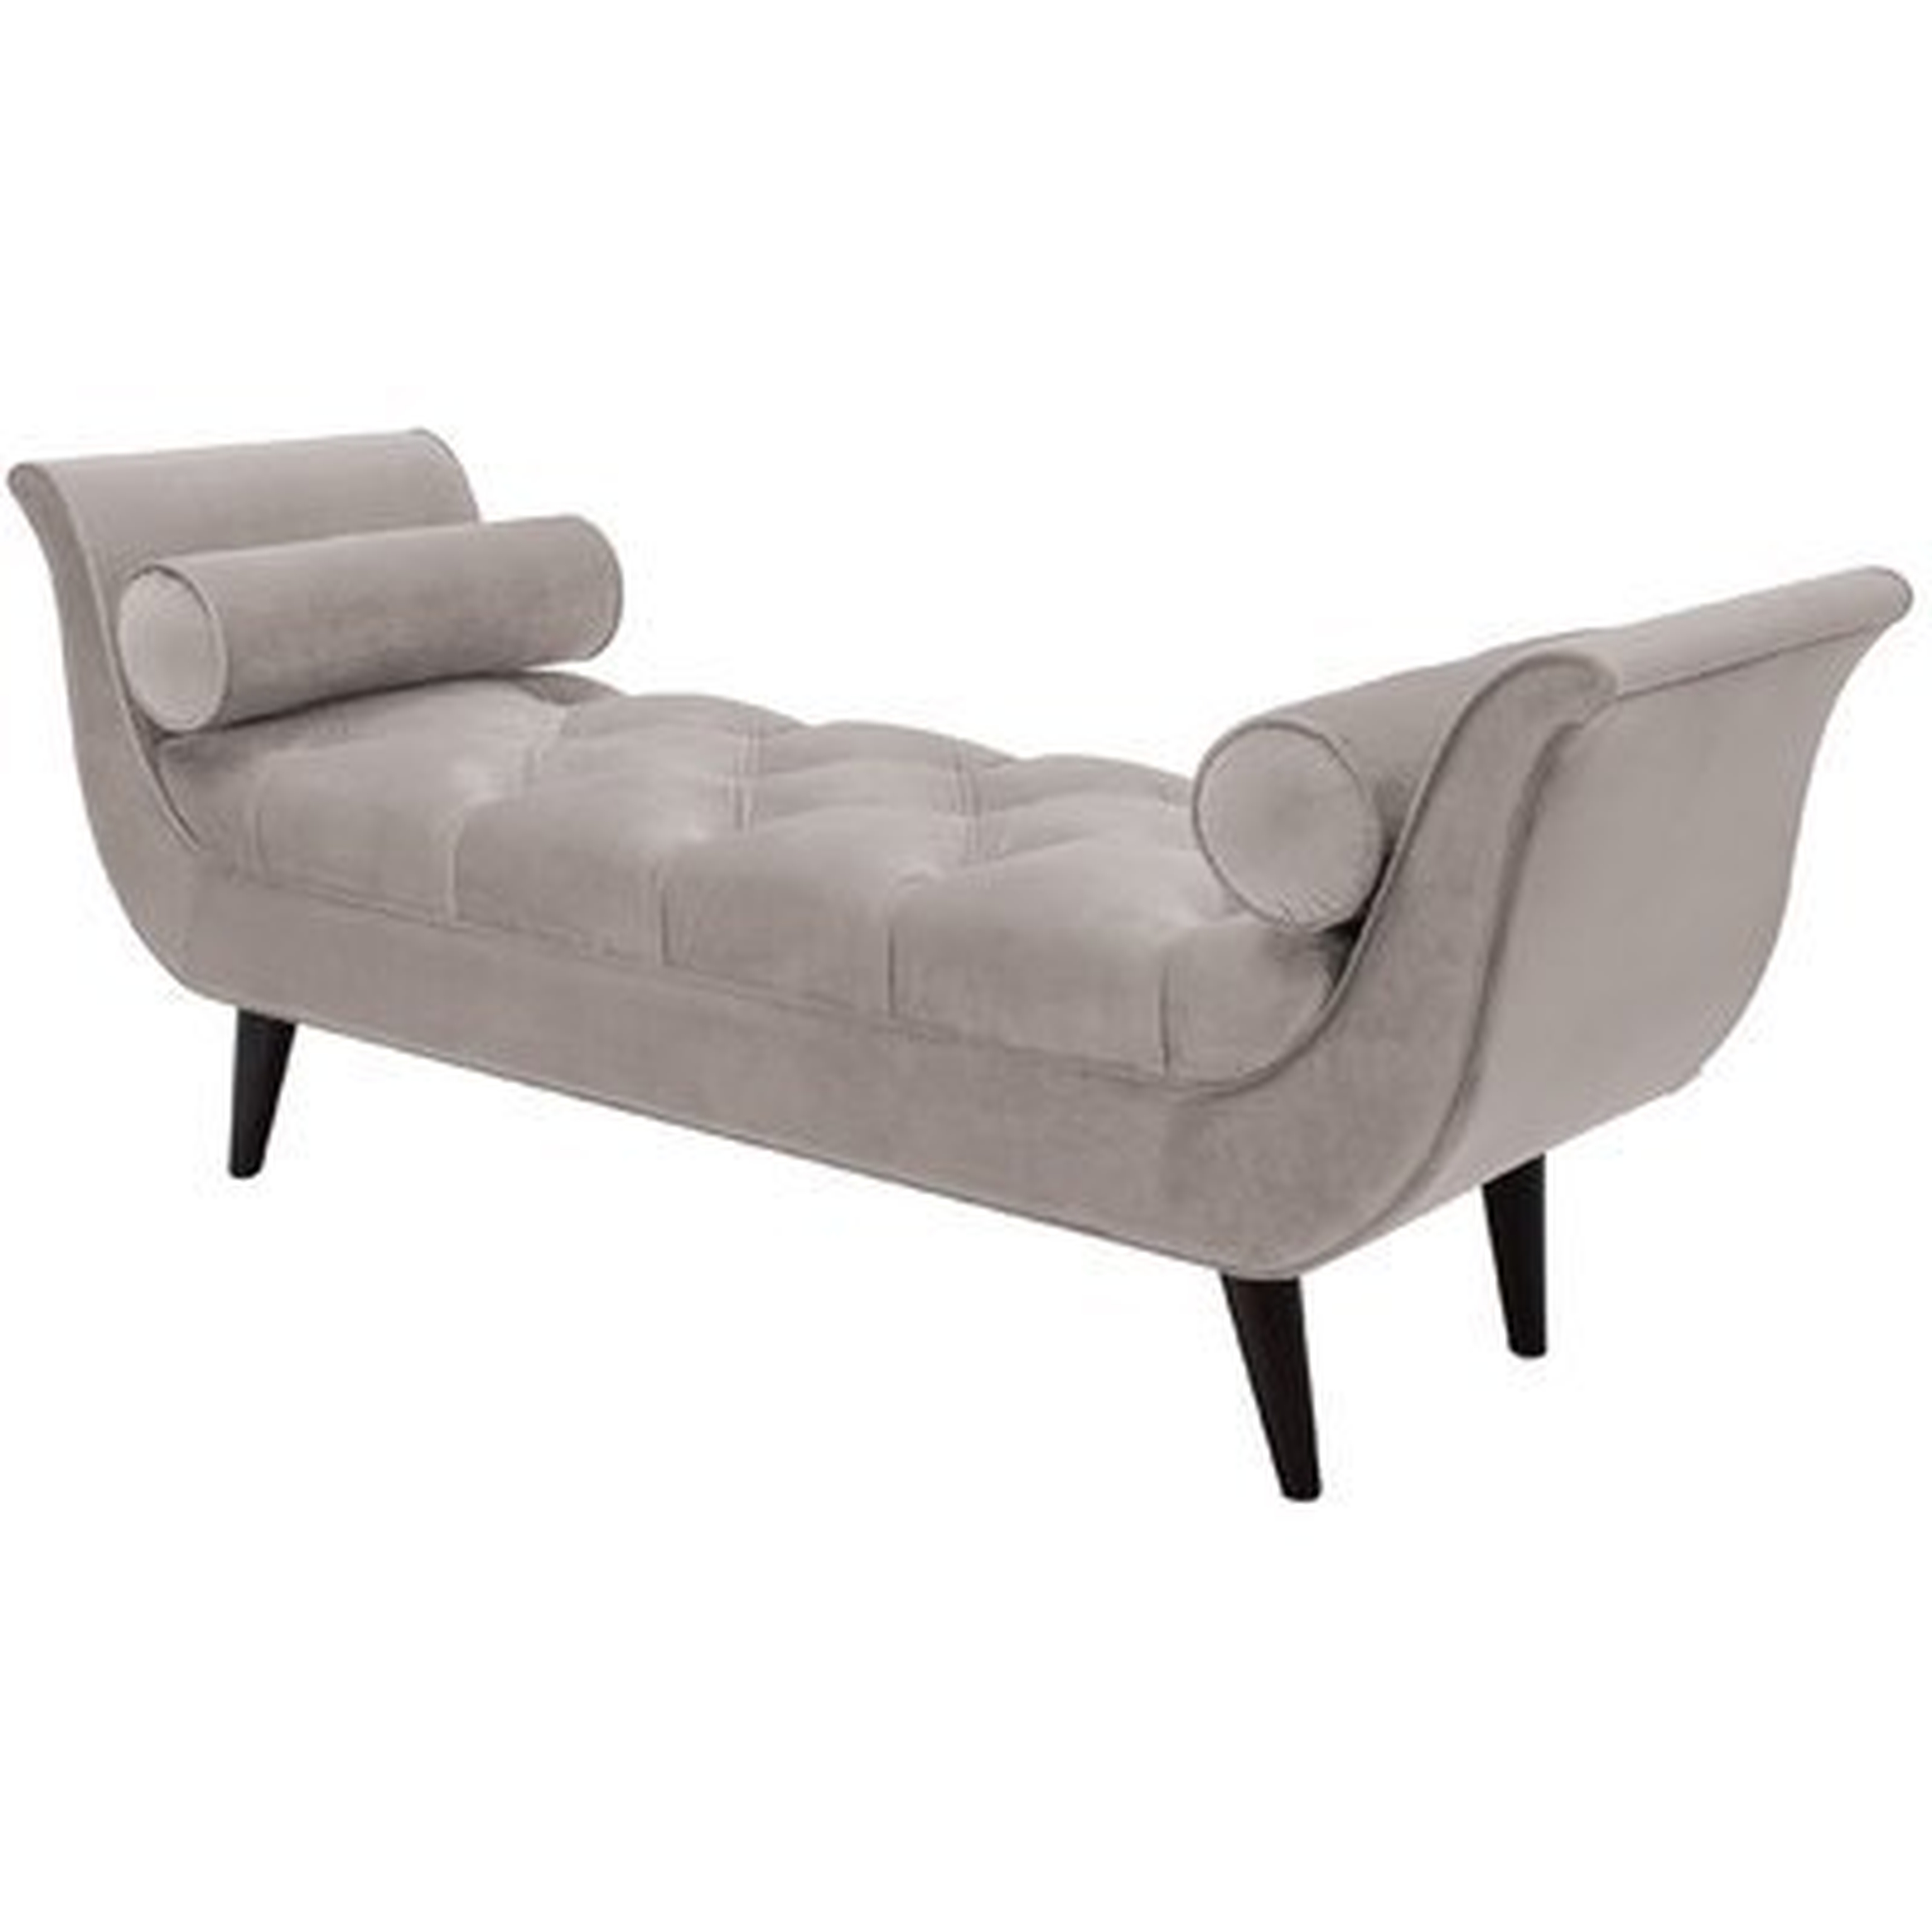 Kalel Upholstered Bench - Wayfair